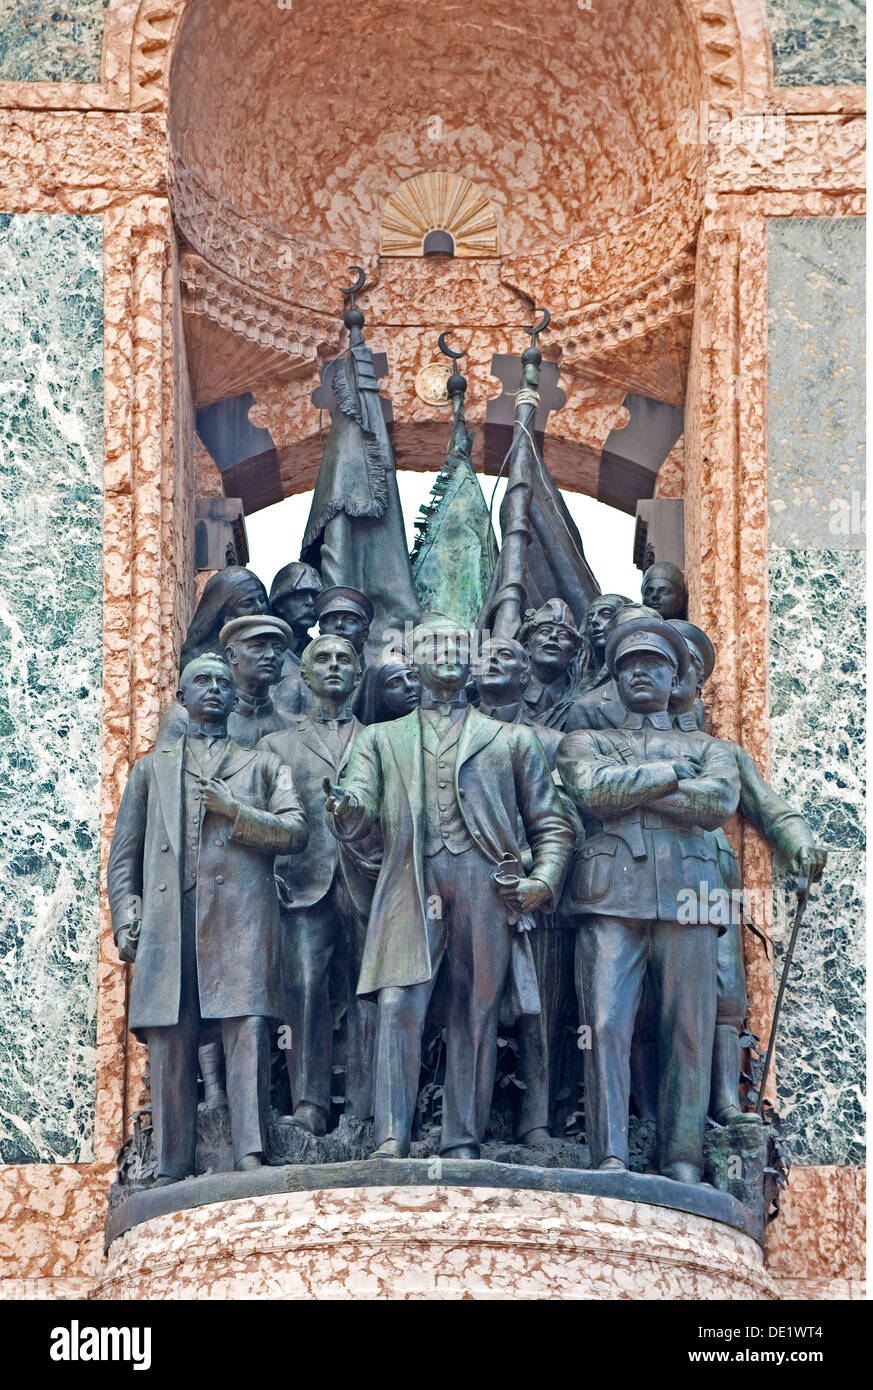 Kemal Atatuerk, Mustafa, 12.3.1881 - 10.11.1938, Turkish politician, President of the Republic of Turkey 1923 - 1938, monument, Taksim Square, Beyoglu, Istanbul, Turkey, Stock Photo